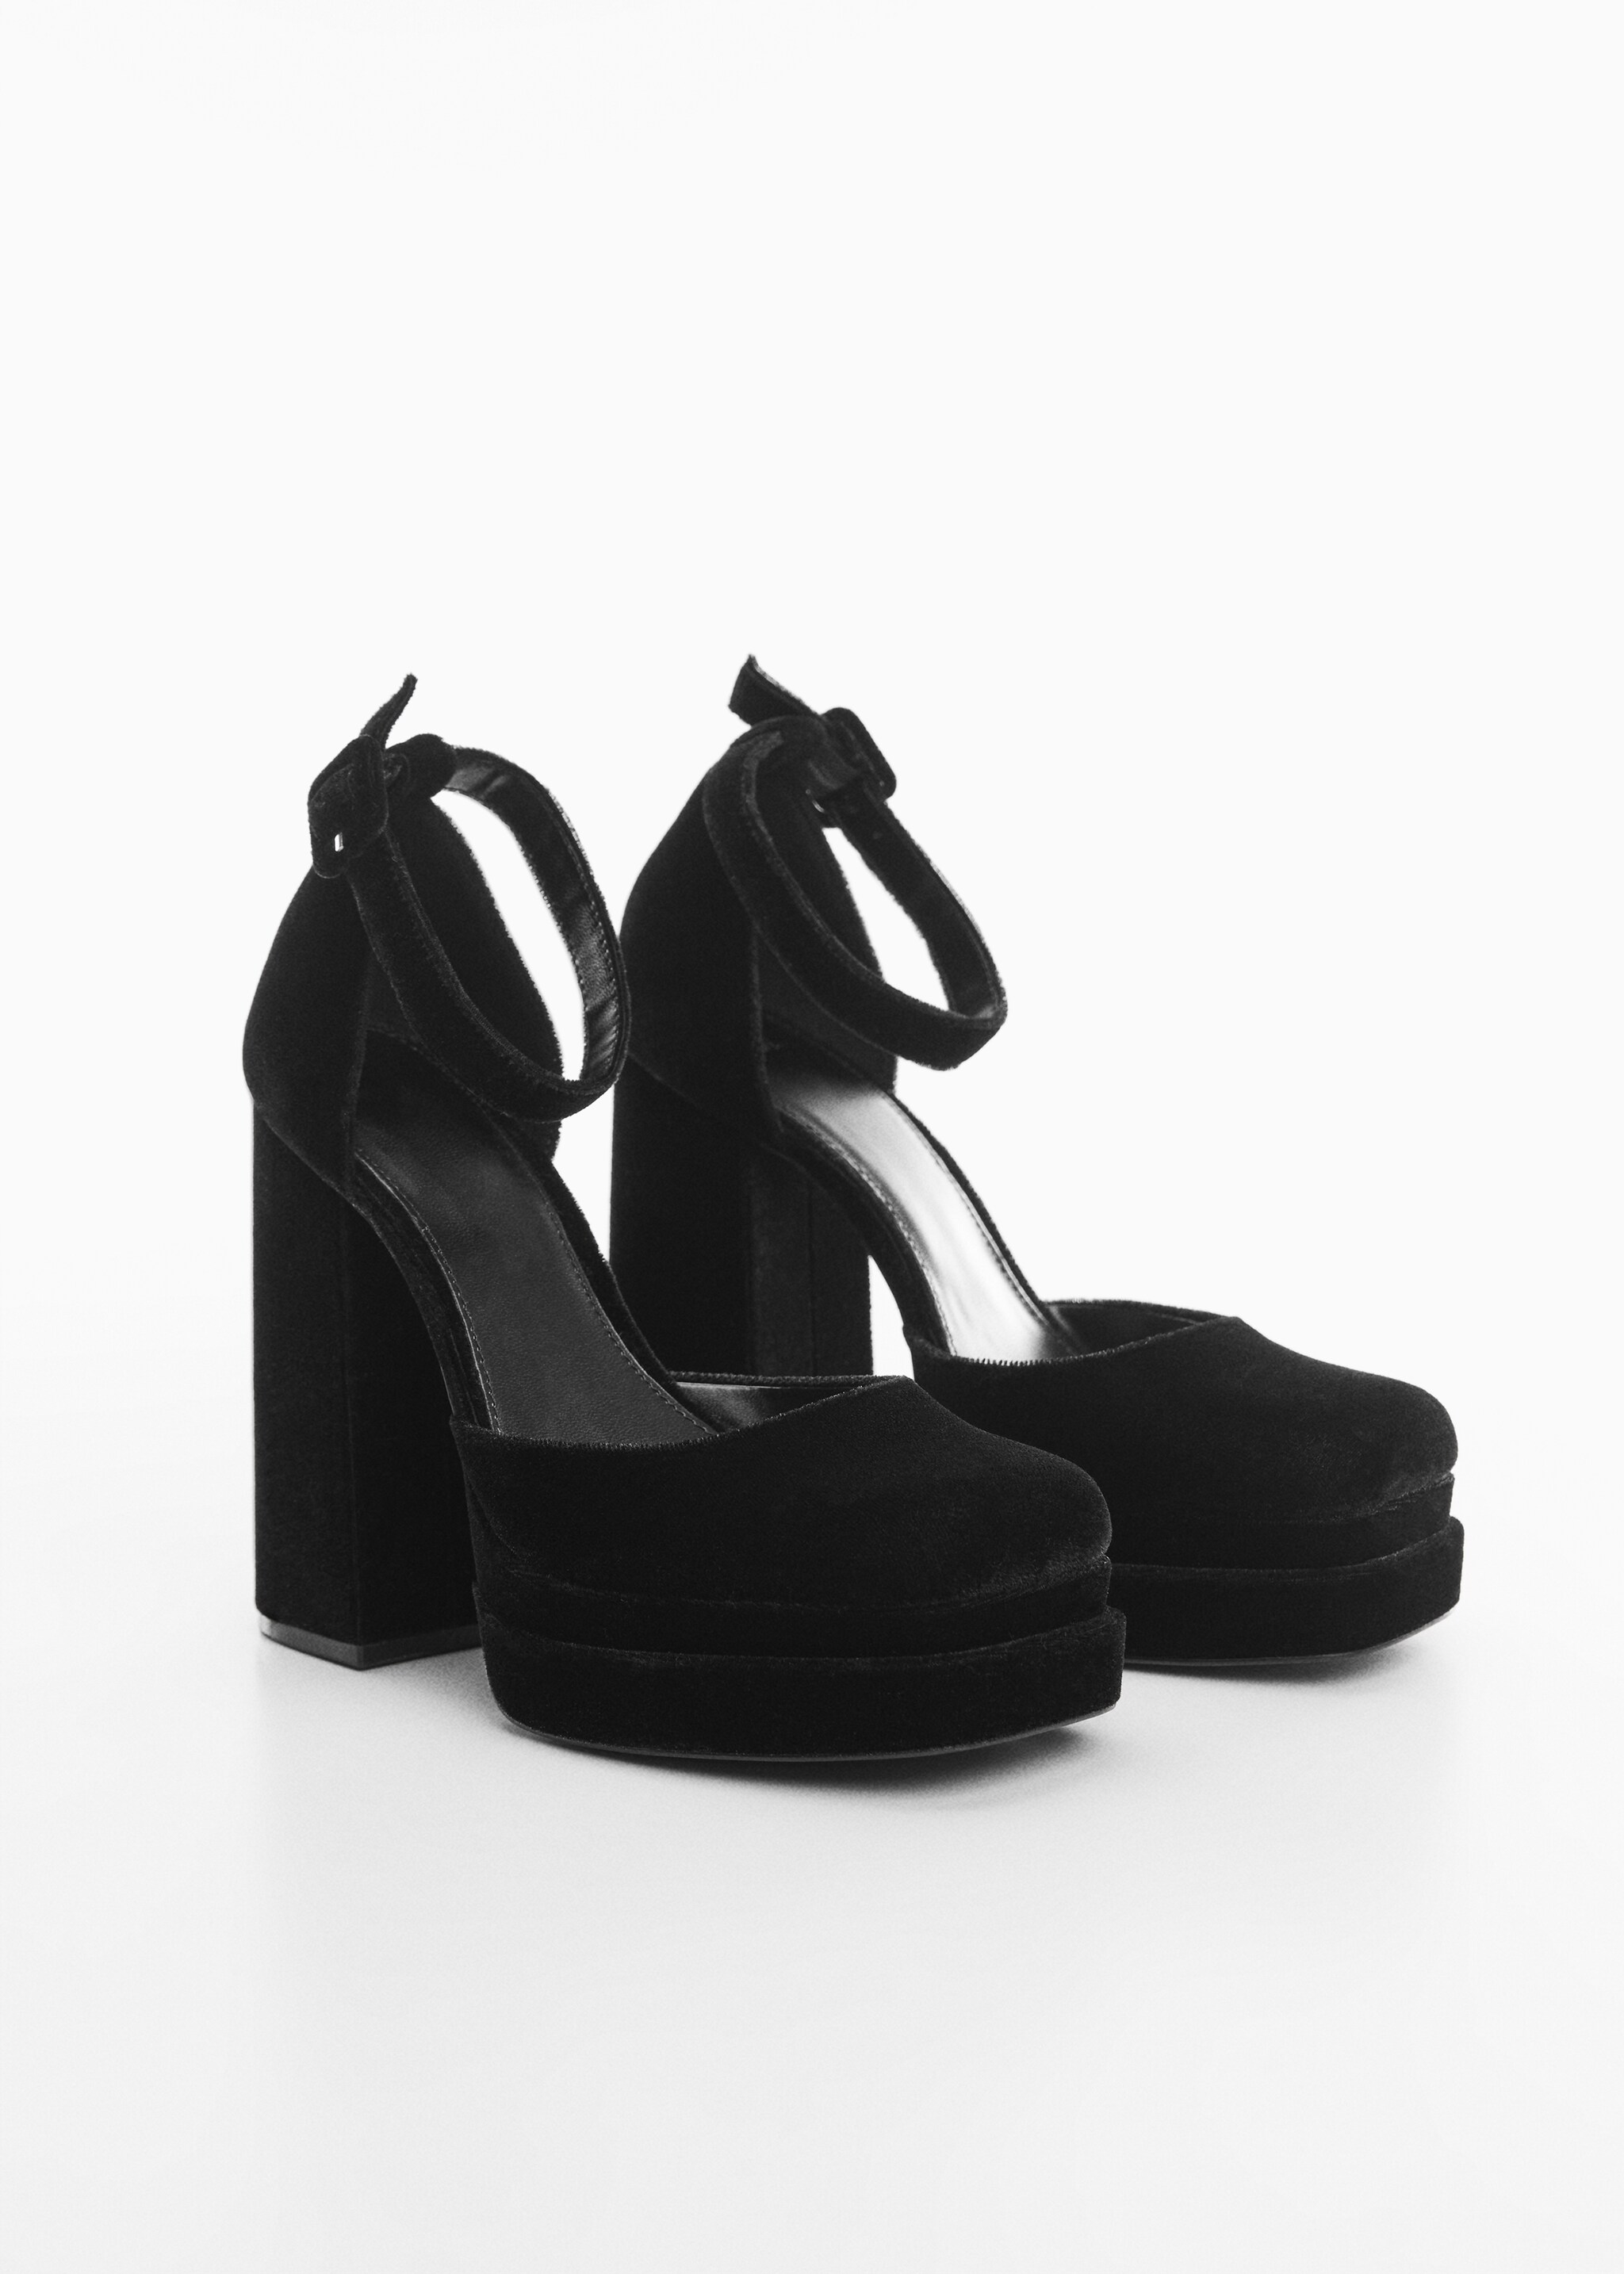 Velvet heeled shoes - Medium plane